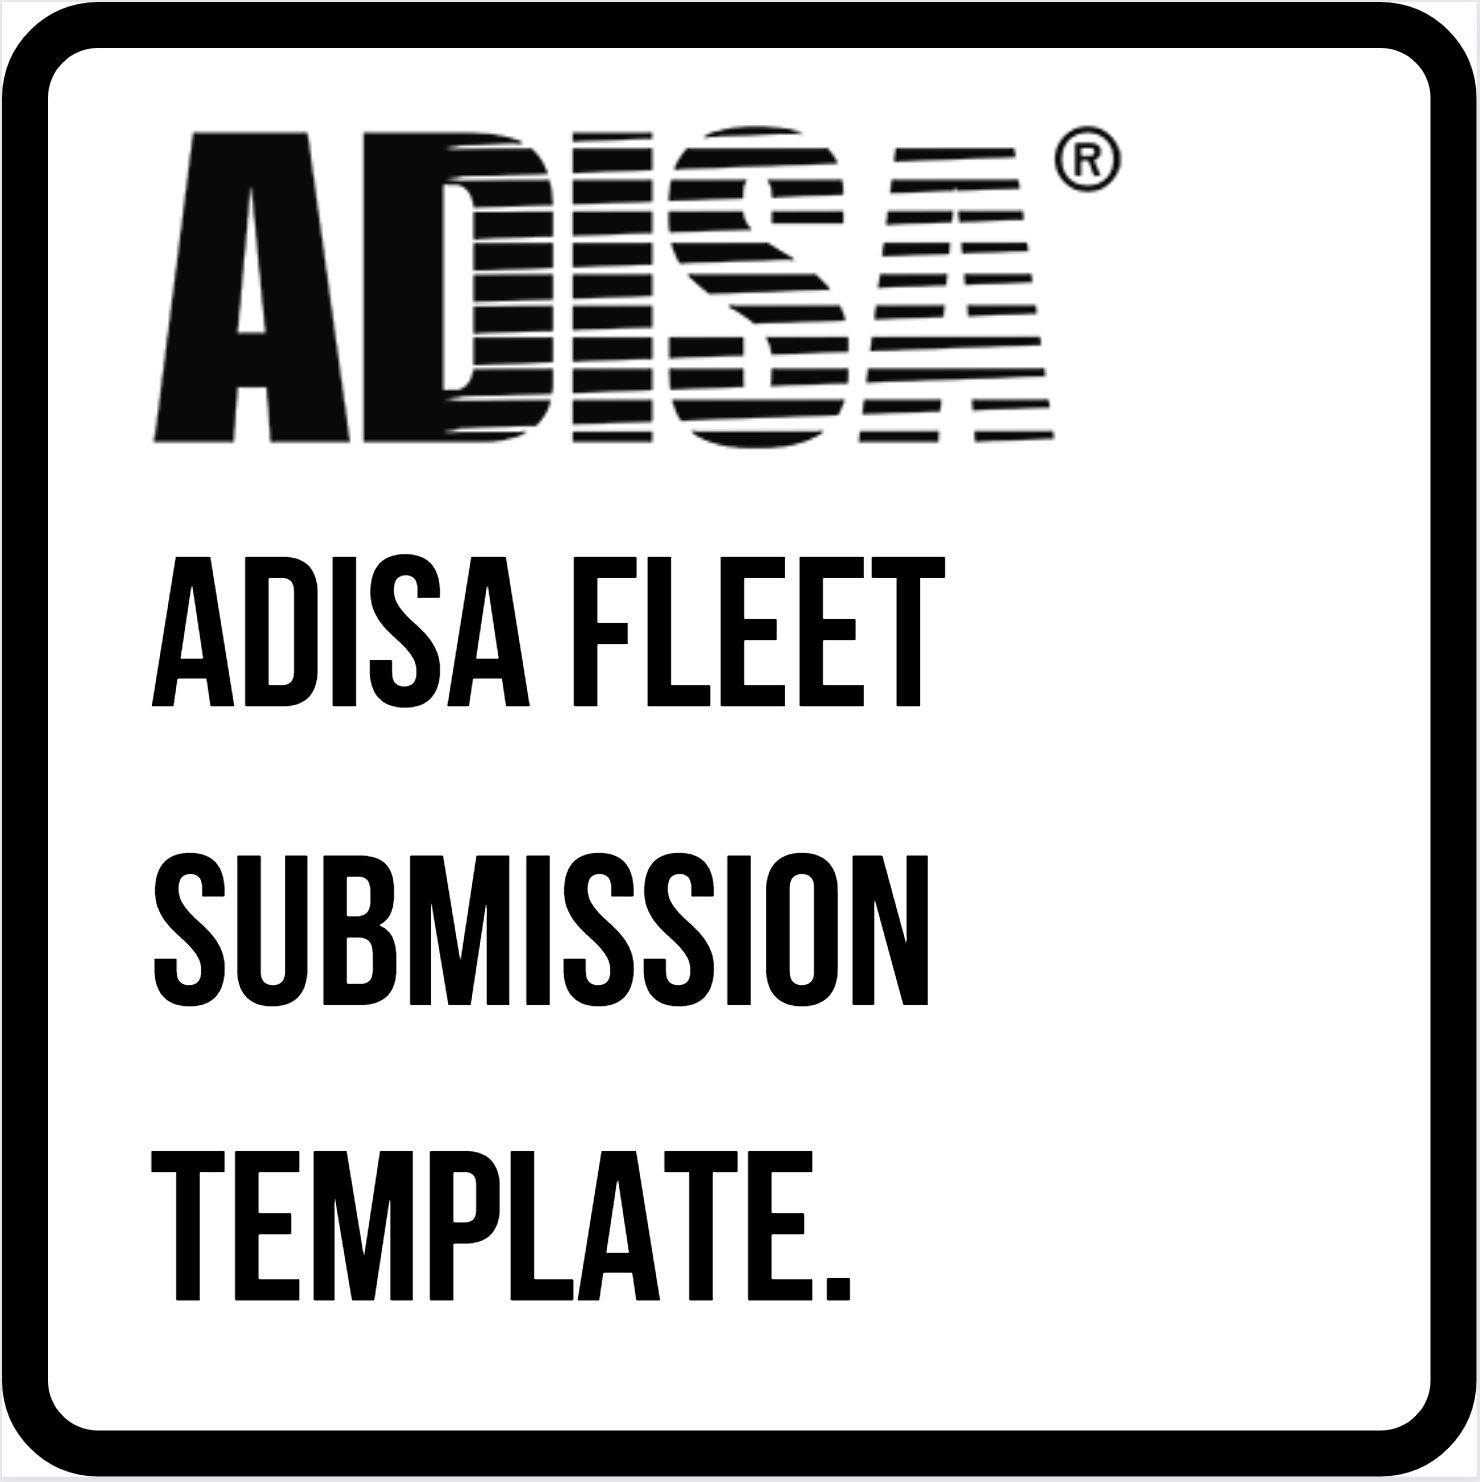 ADISA Fleet Submission Template.